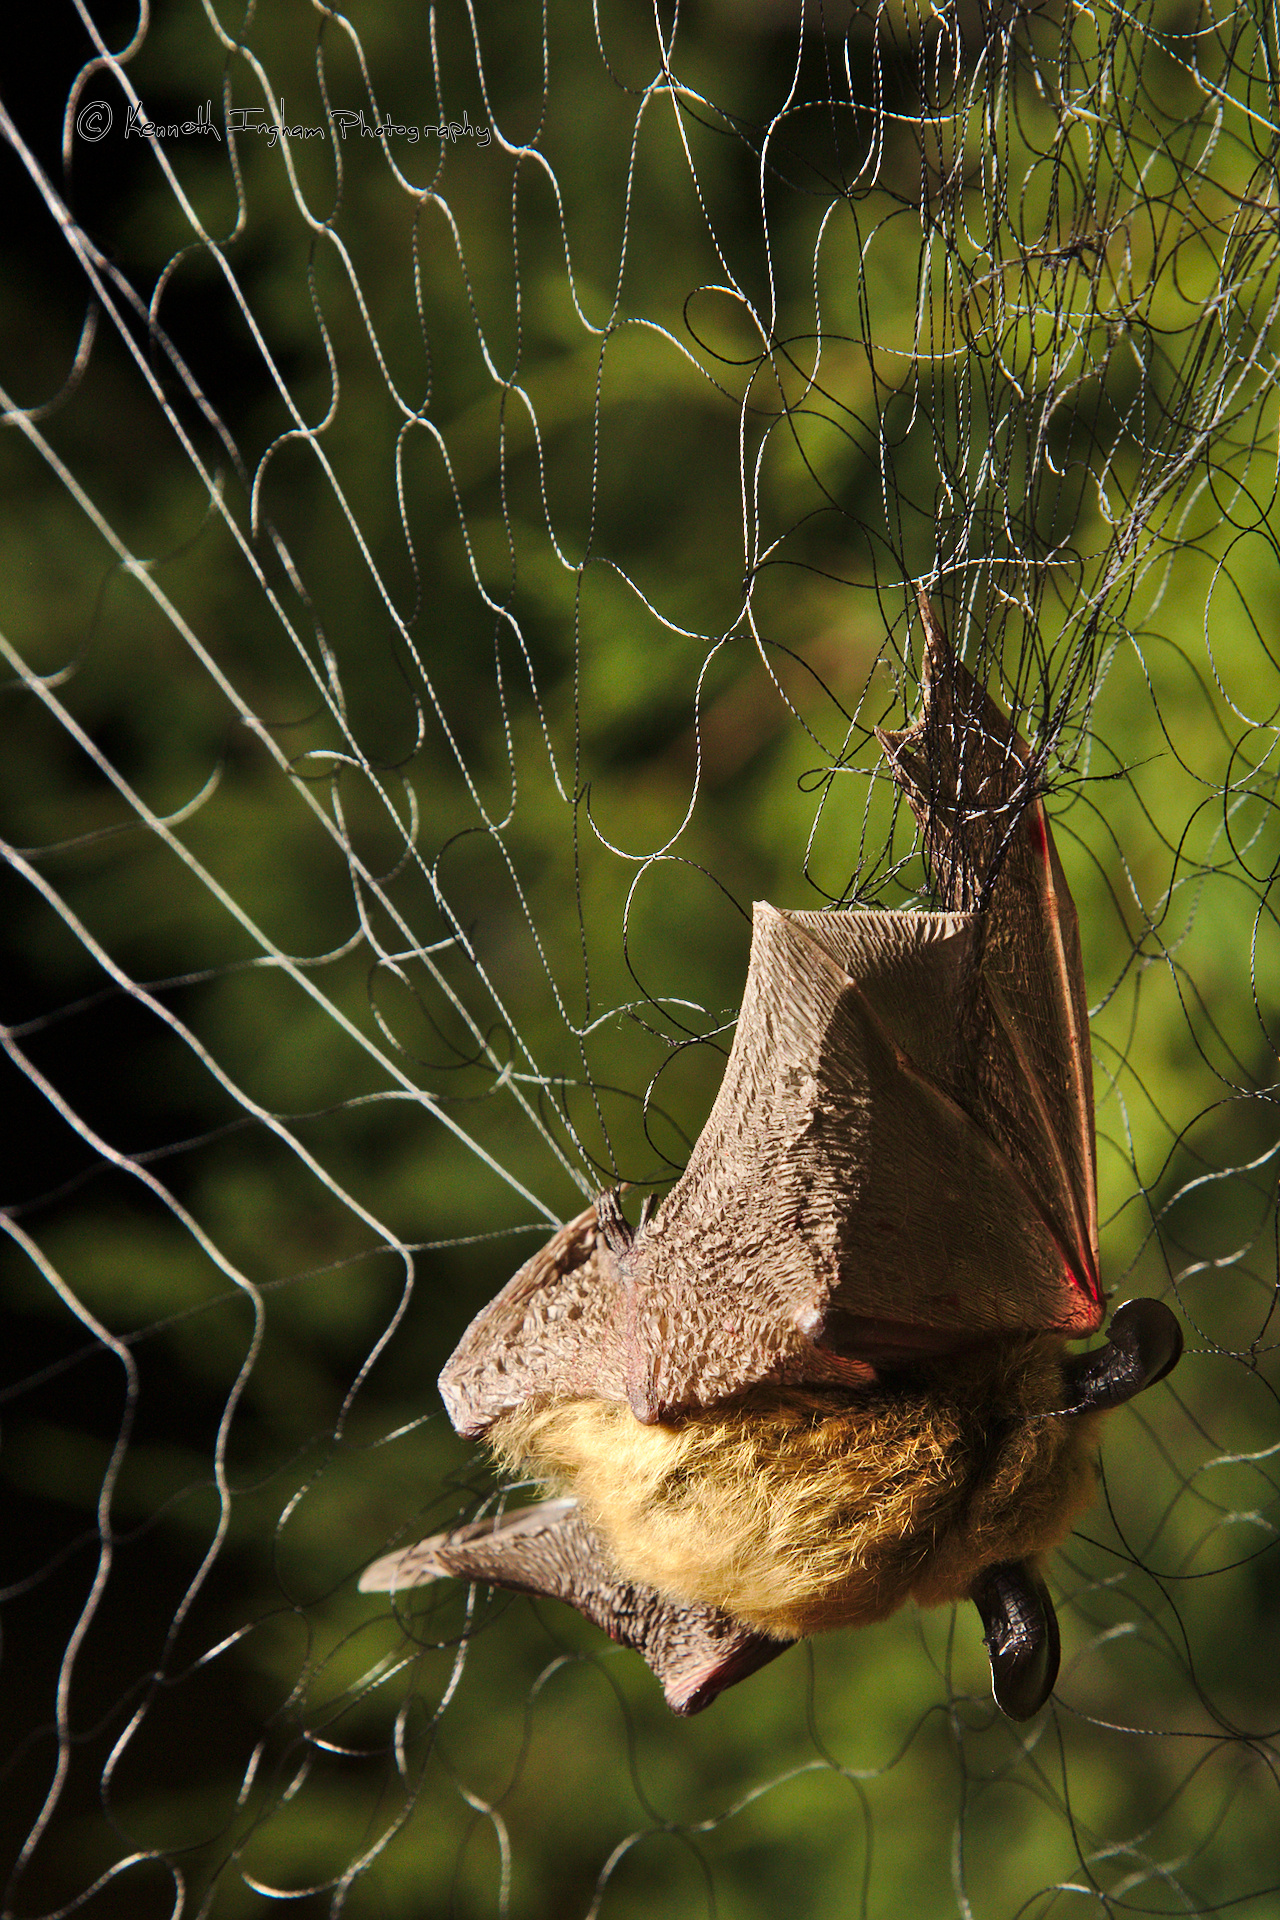 Western long-eared myotis (Myotis evotis) in a mist net